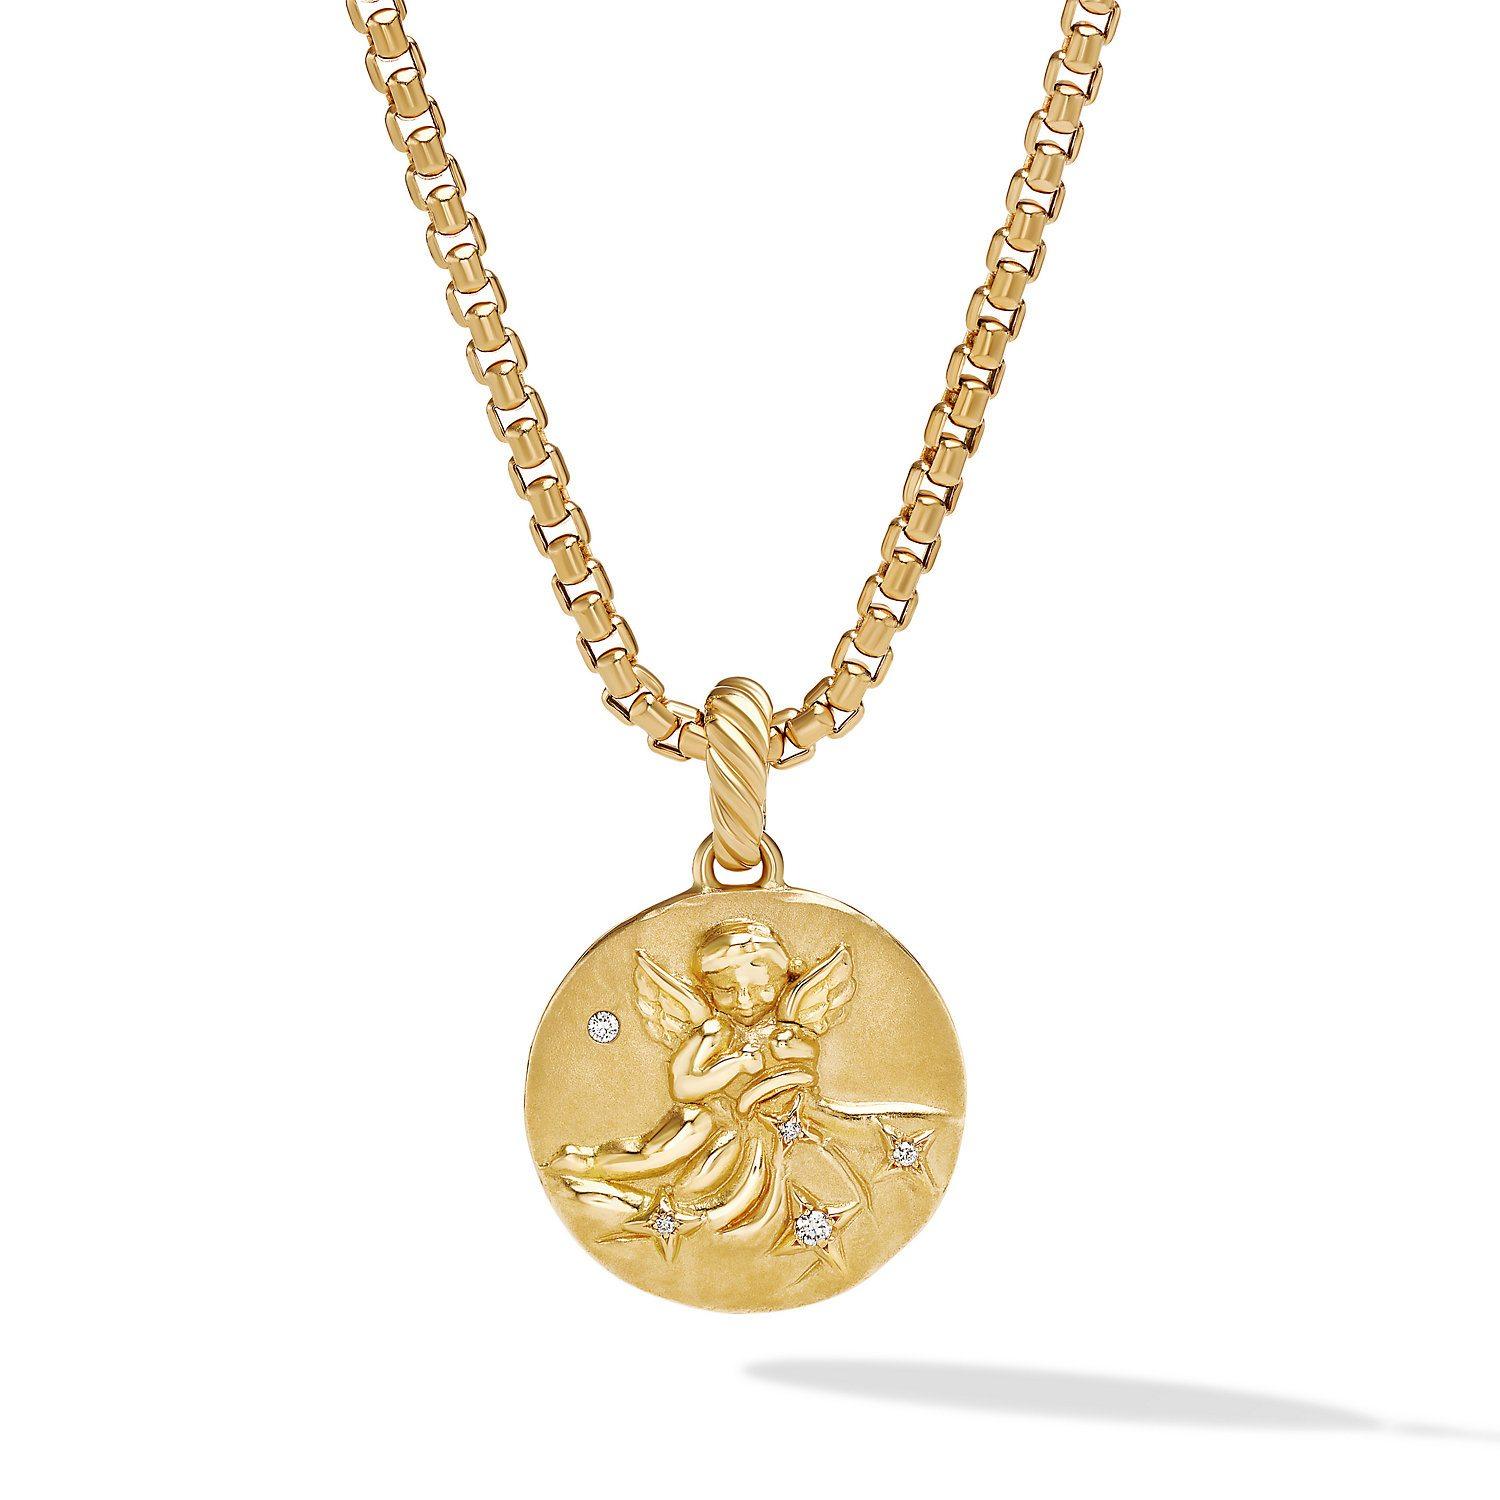 David Yurman Aquarius Amulet in 18k Yellow Gold with Diamonds 1